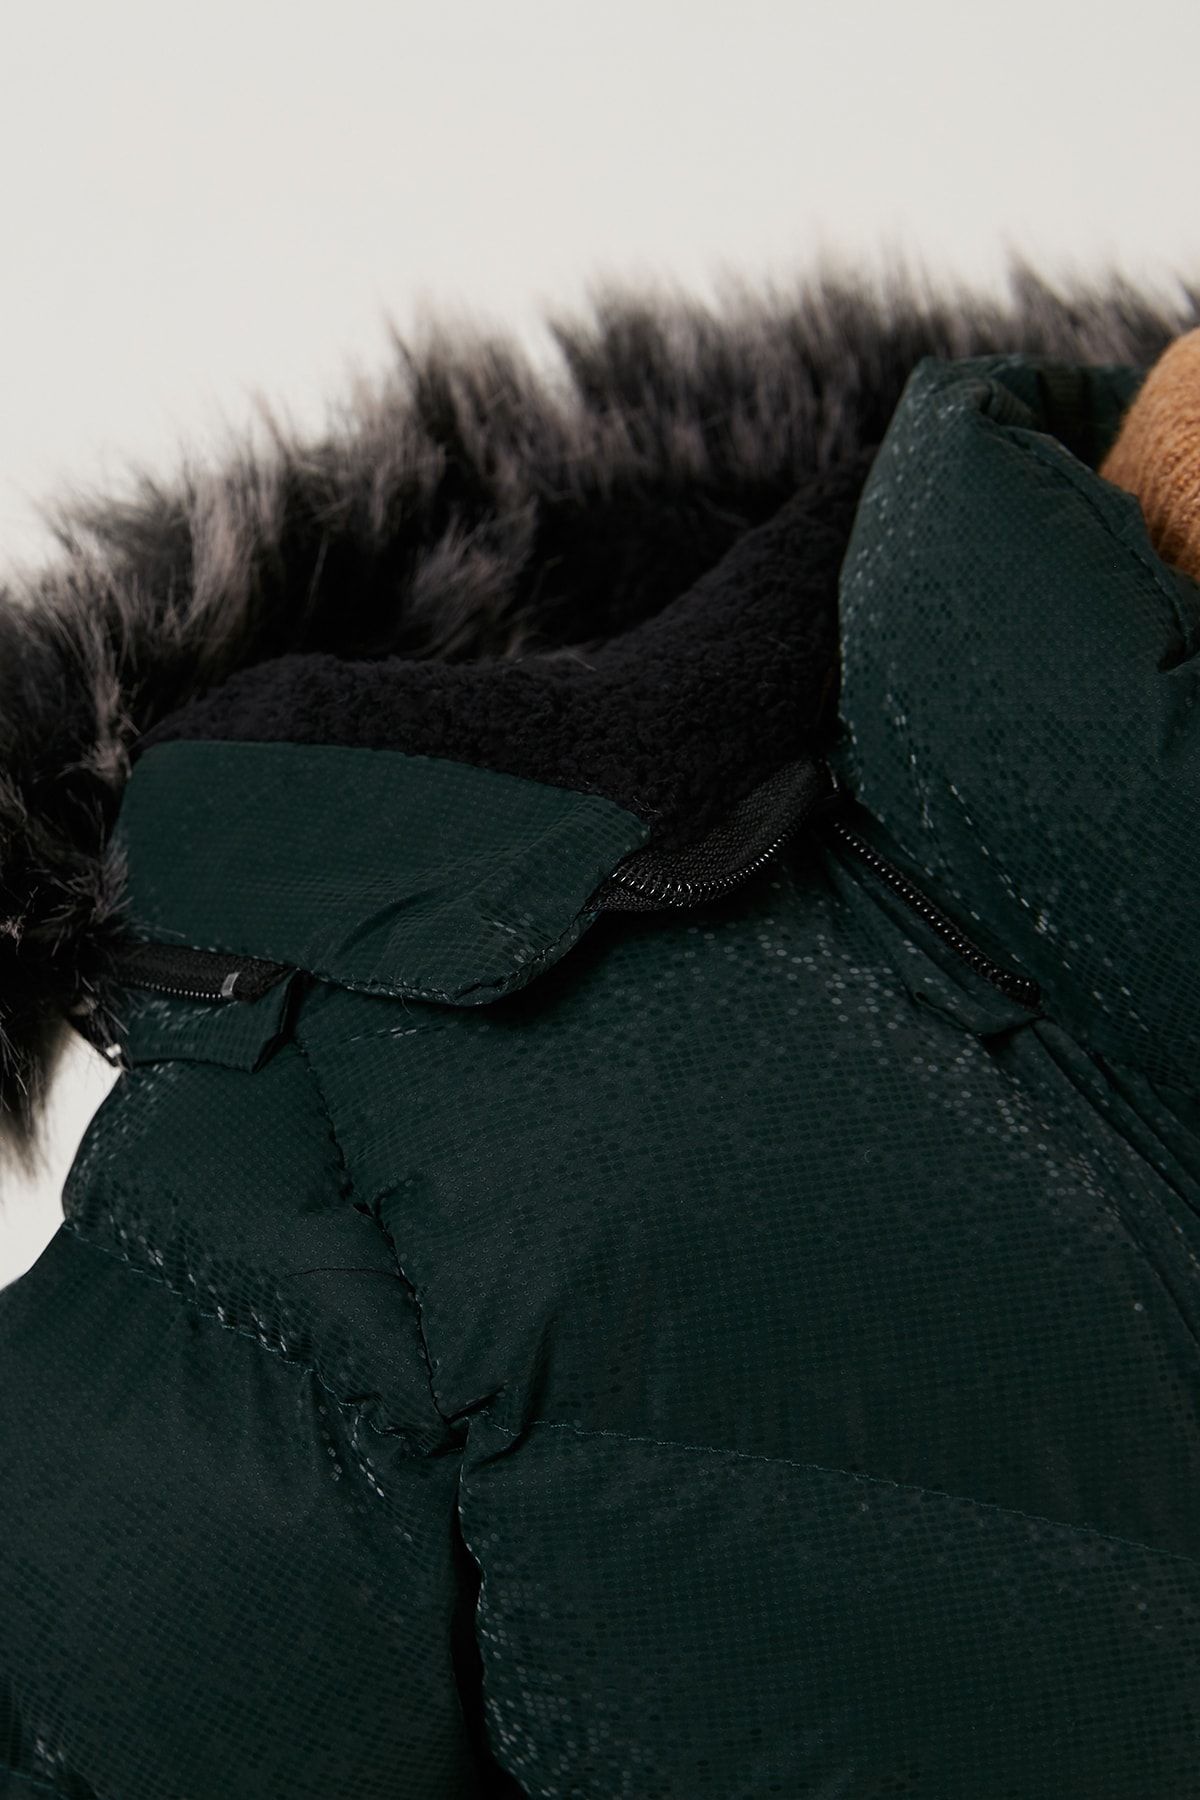 Lela کت زمستانی پسرانه یقه خز مصنوعی با آستر مخمل دار کلاهدار قابل جابجایی مانتو 5761906